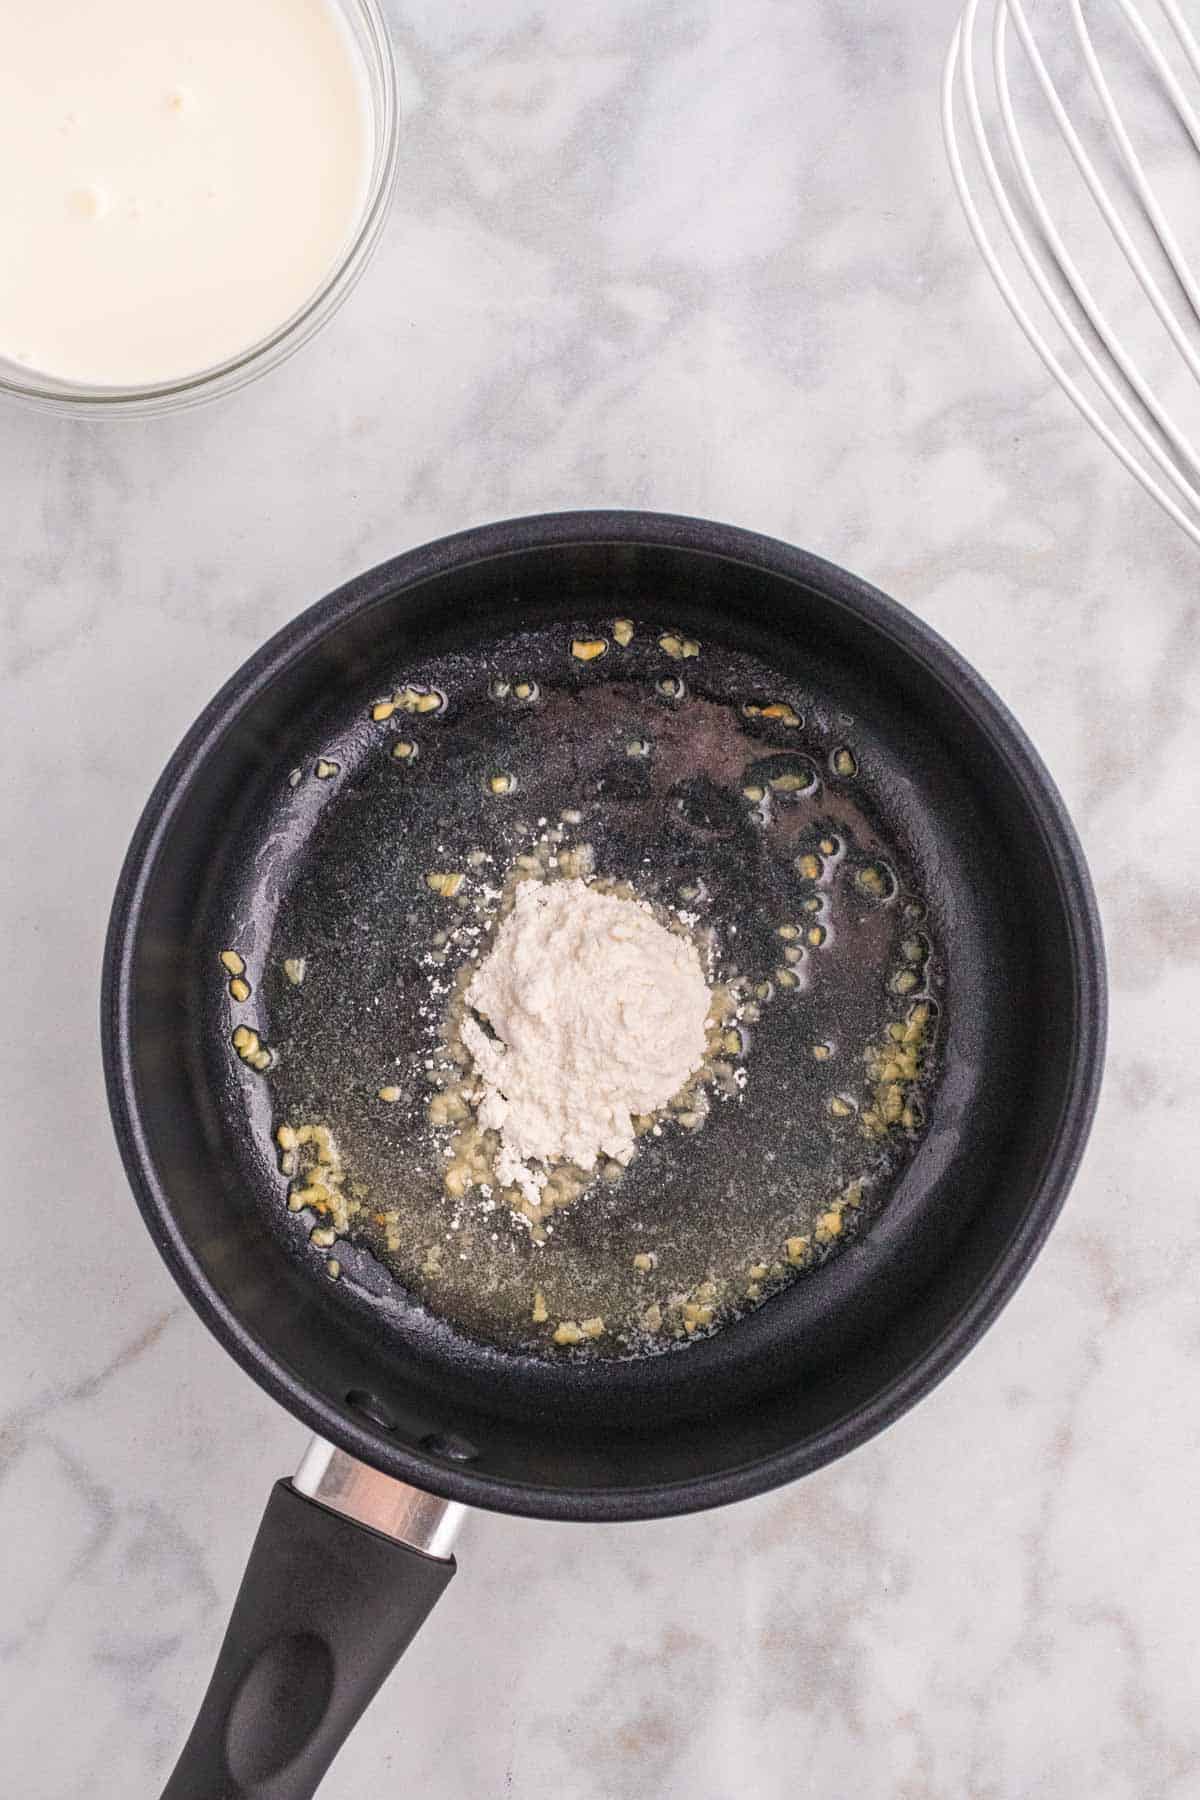 flour, butter and minced garlic in a saucepan